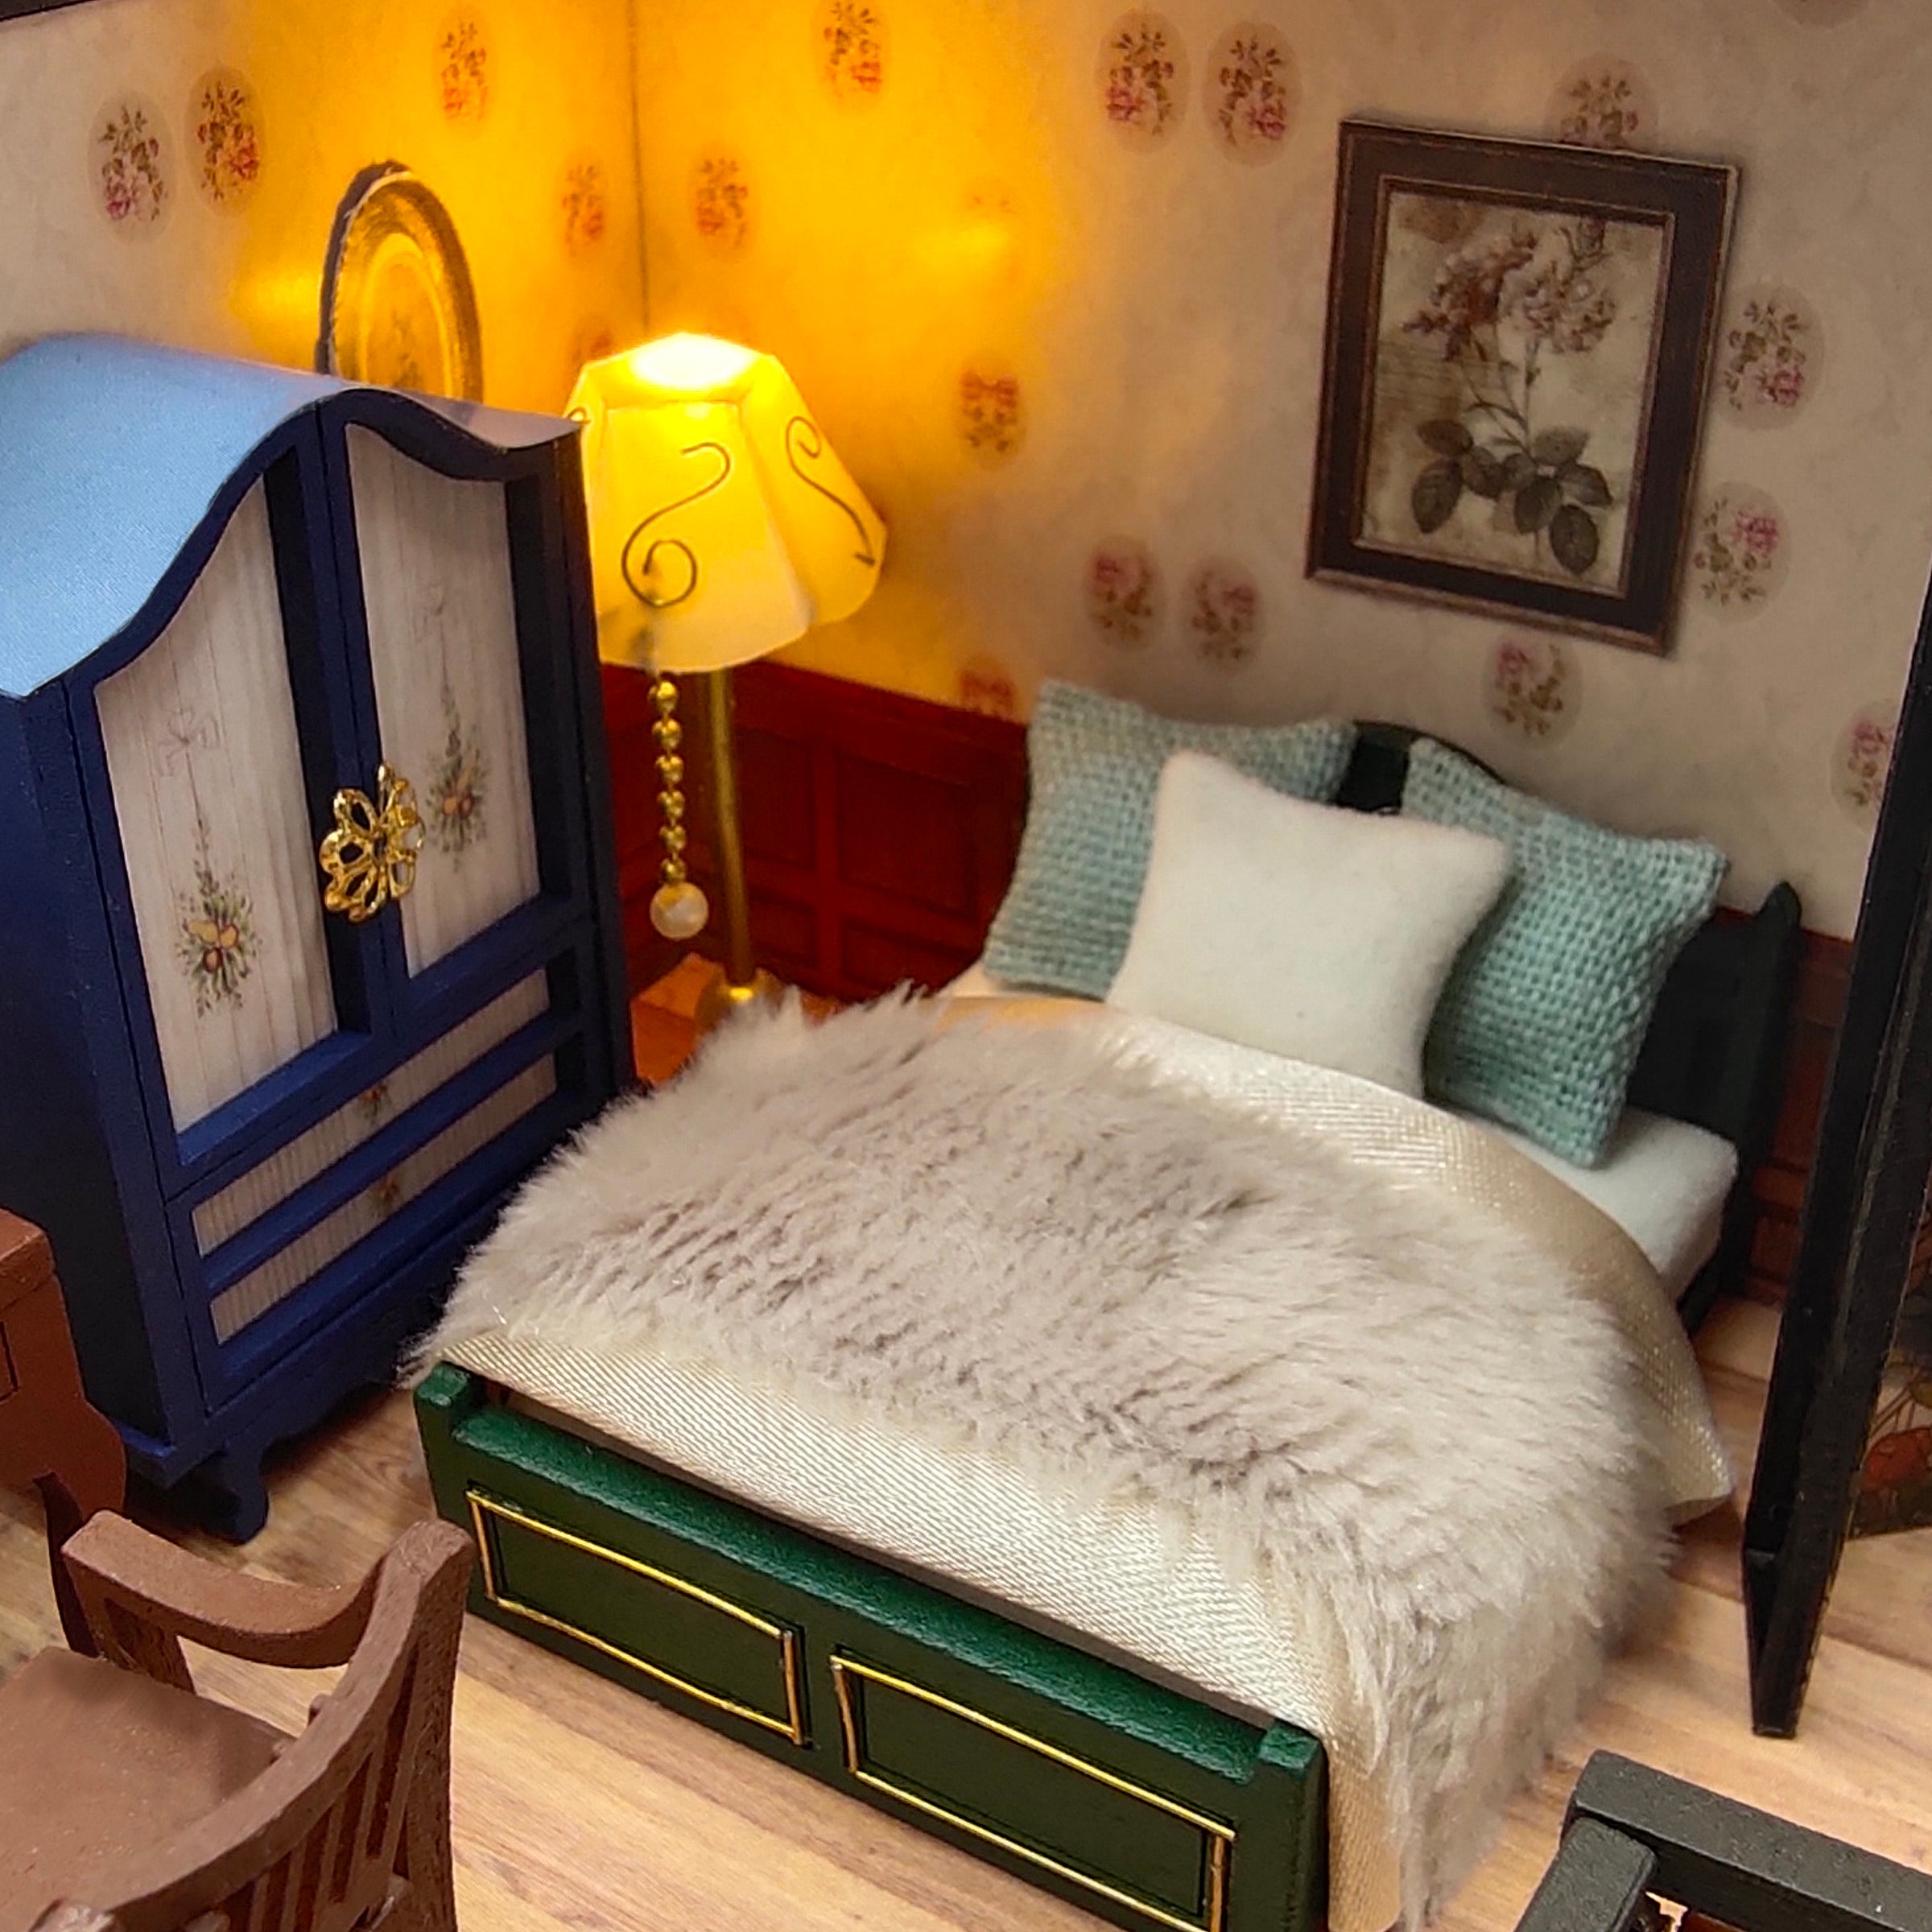 My Dream Room Series TW44 DIY Miniature House Kit - Cutebee Dollhouse